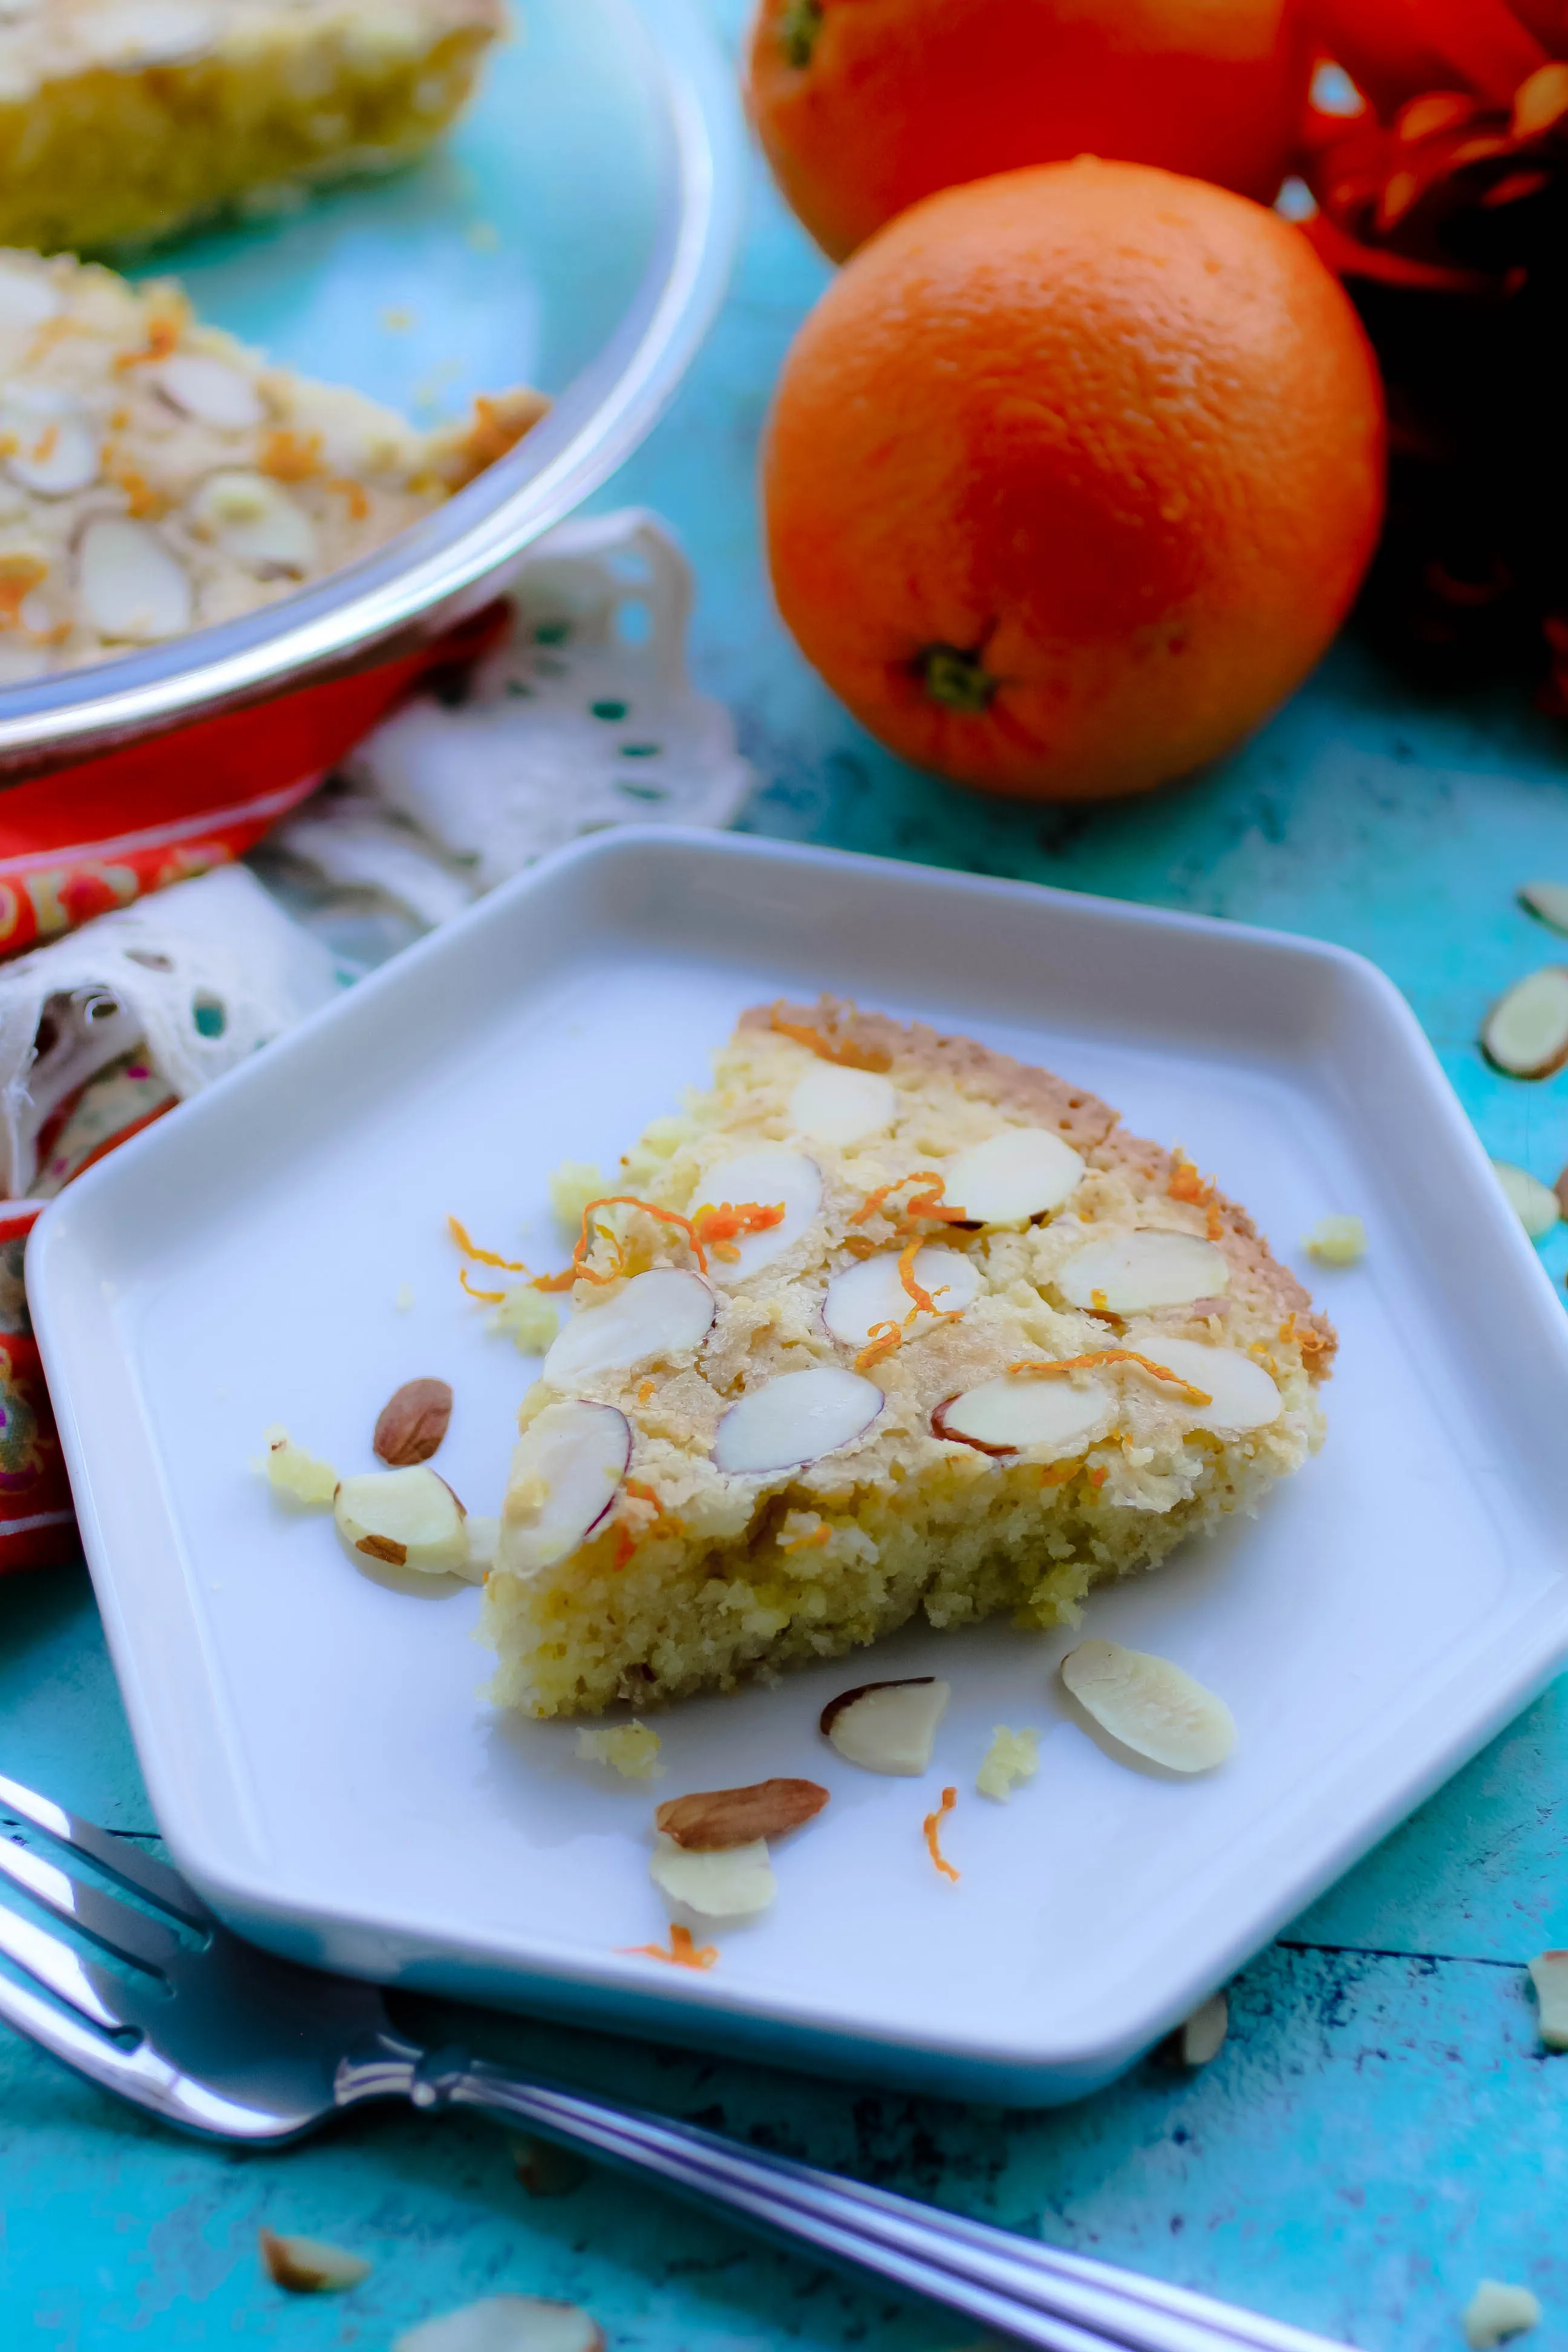 Almond-Orange Sunshine Cake is calling for you! Make this Almond-Orange Sunshine Cake soon!